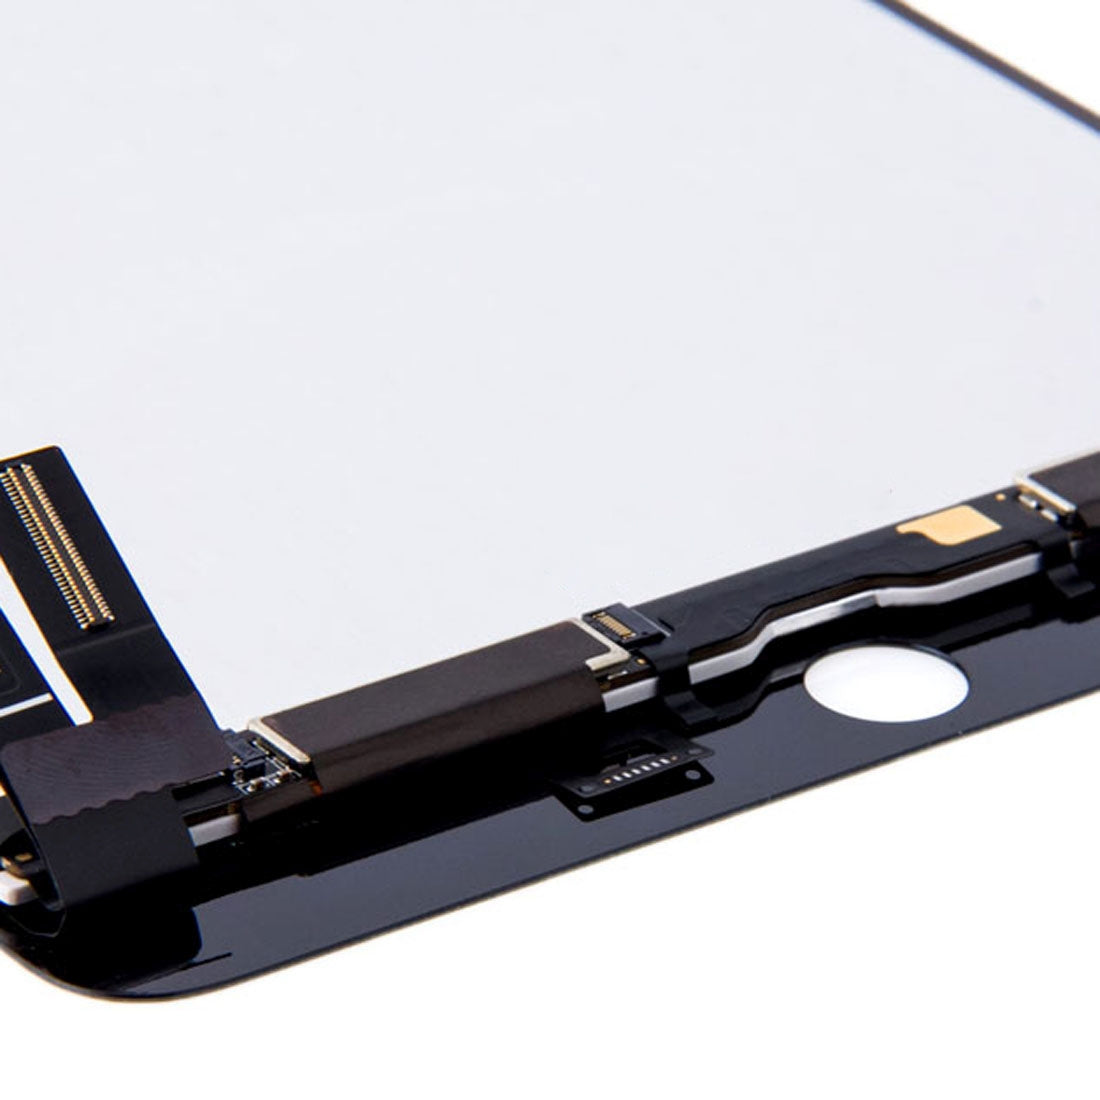 LCD Screen + Touch Digitizer Apple iPad Mini 4 Black